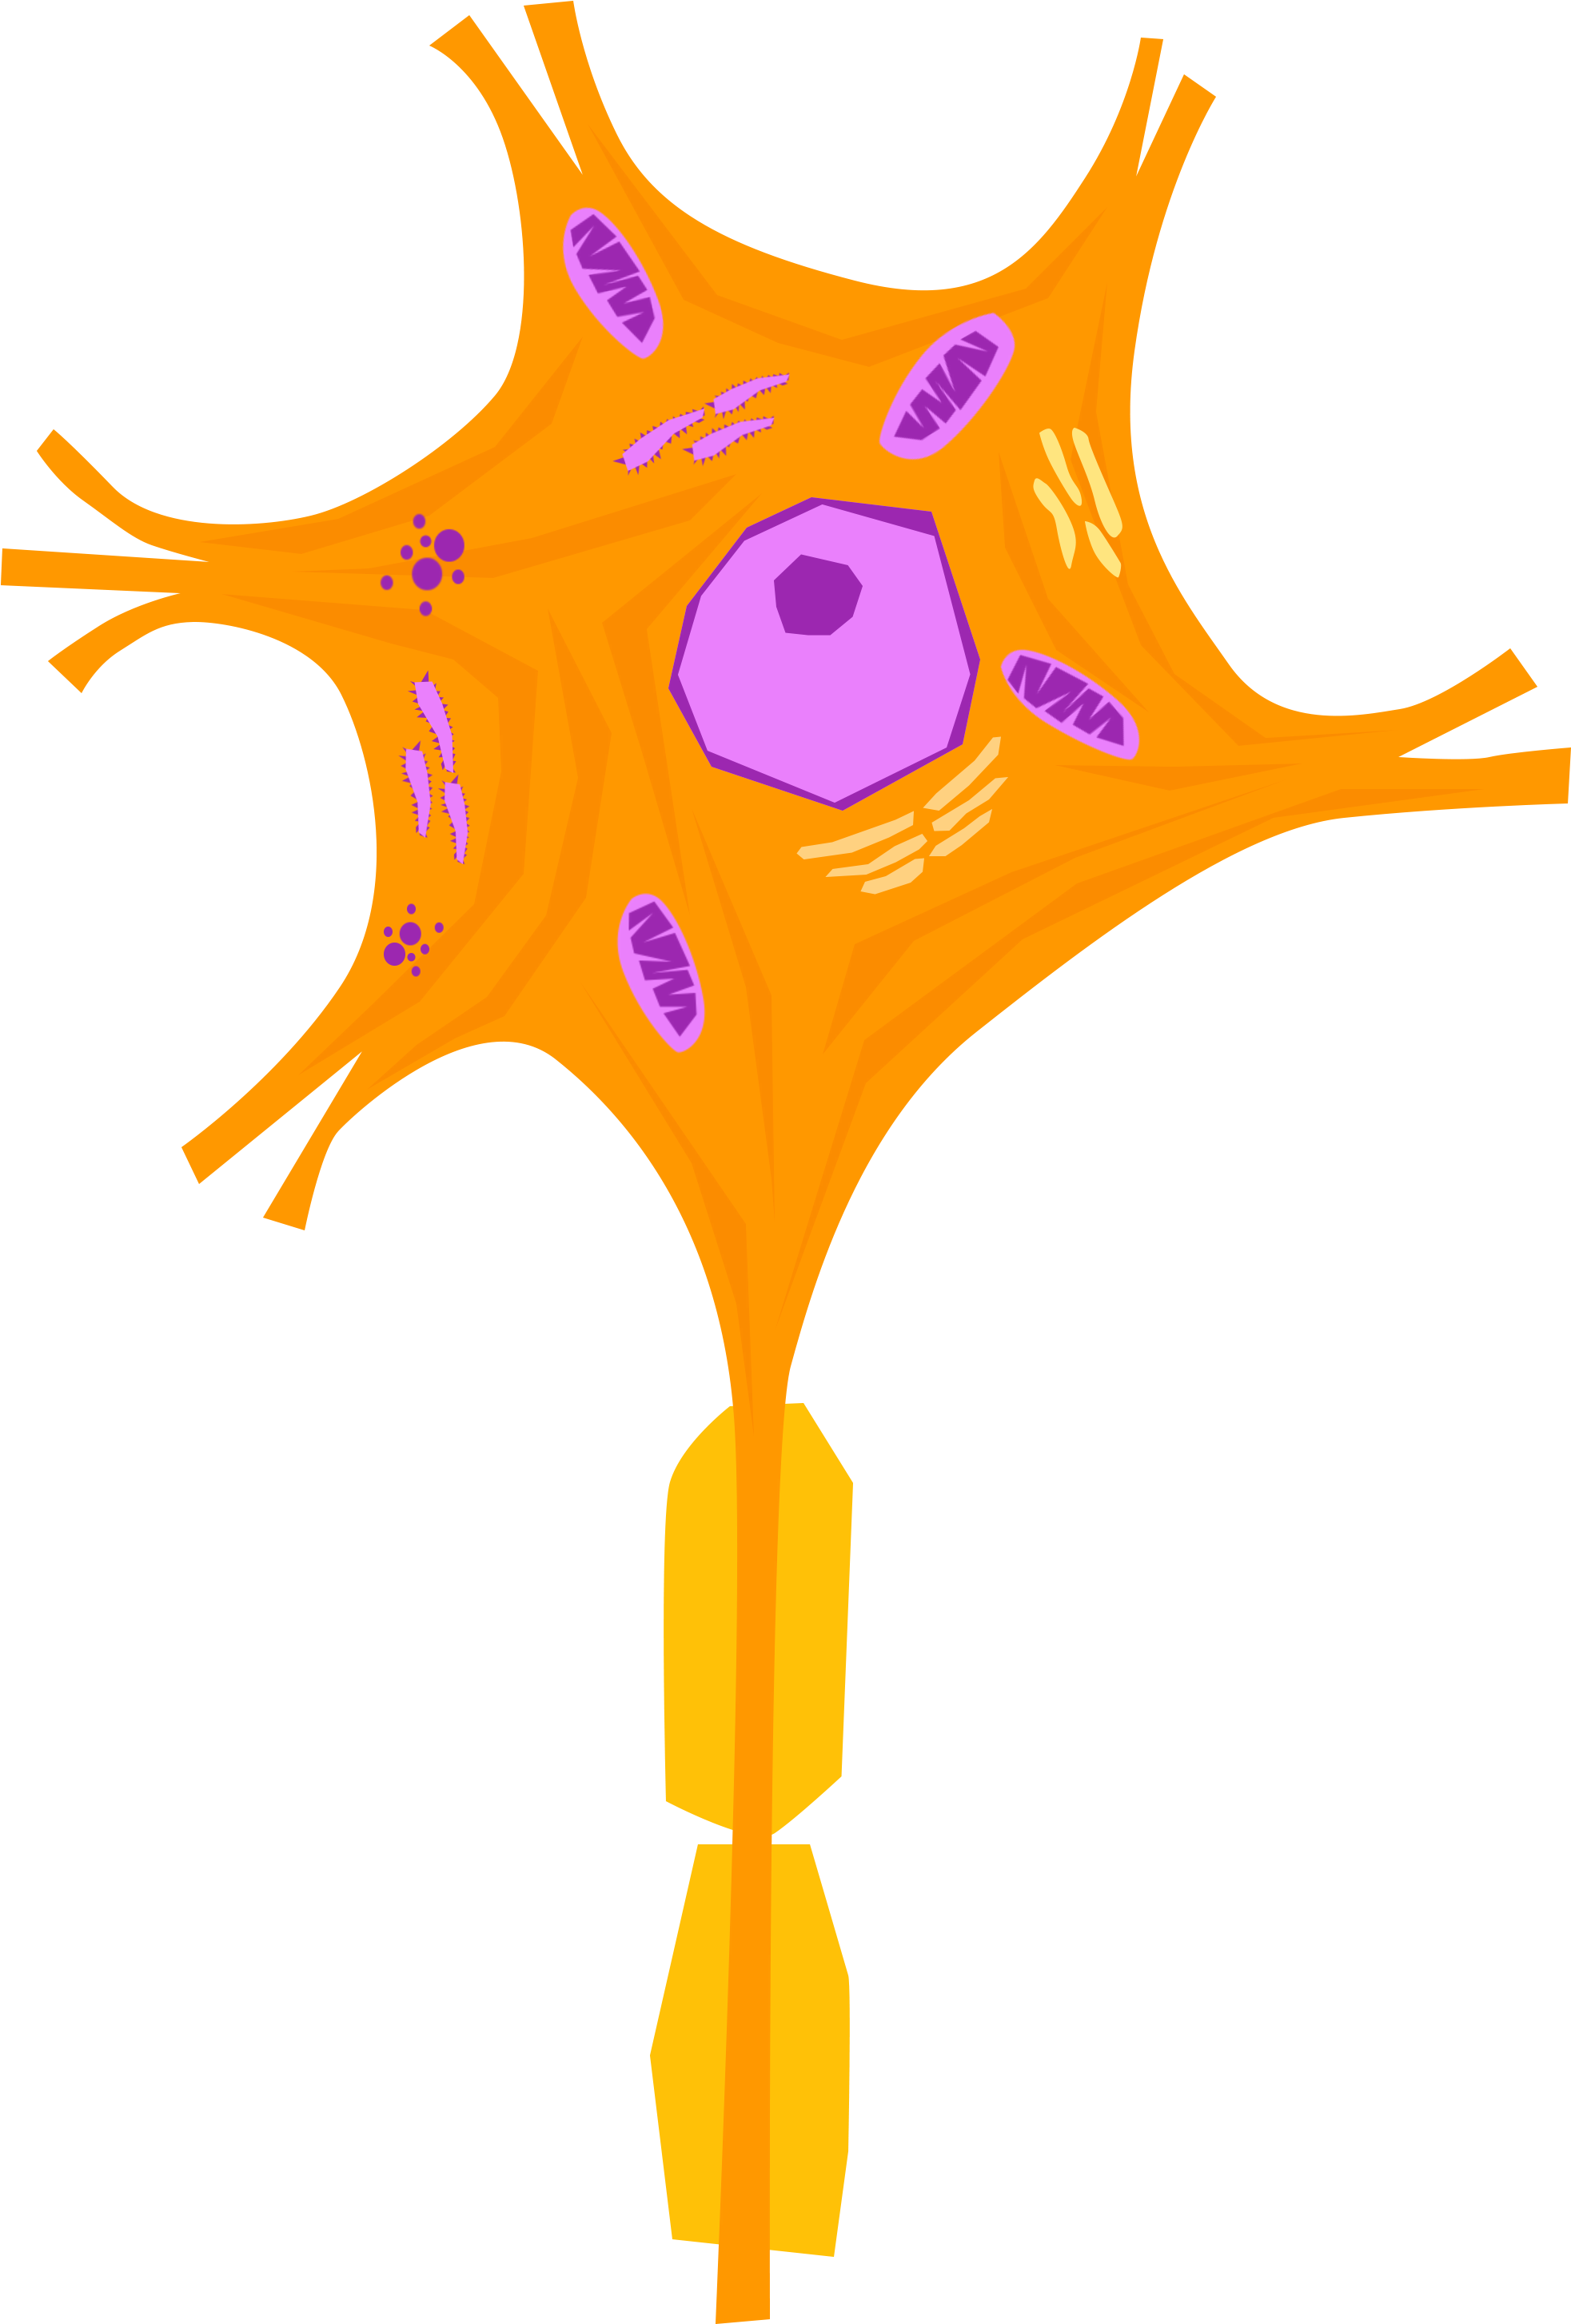 Nerve Cell 01 - Nervous Tissue Cells Of Neuron (4096x3112)